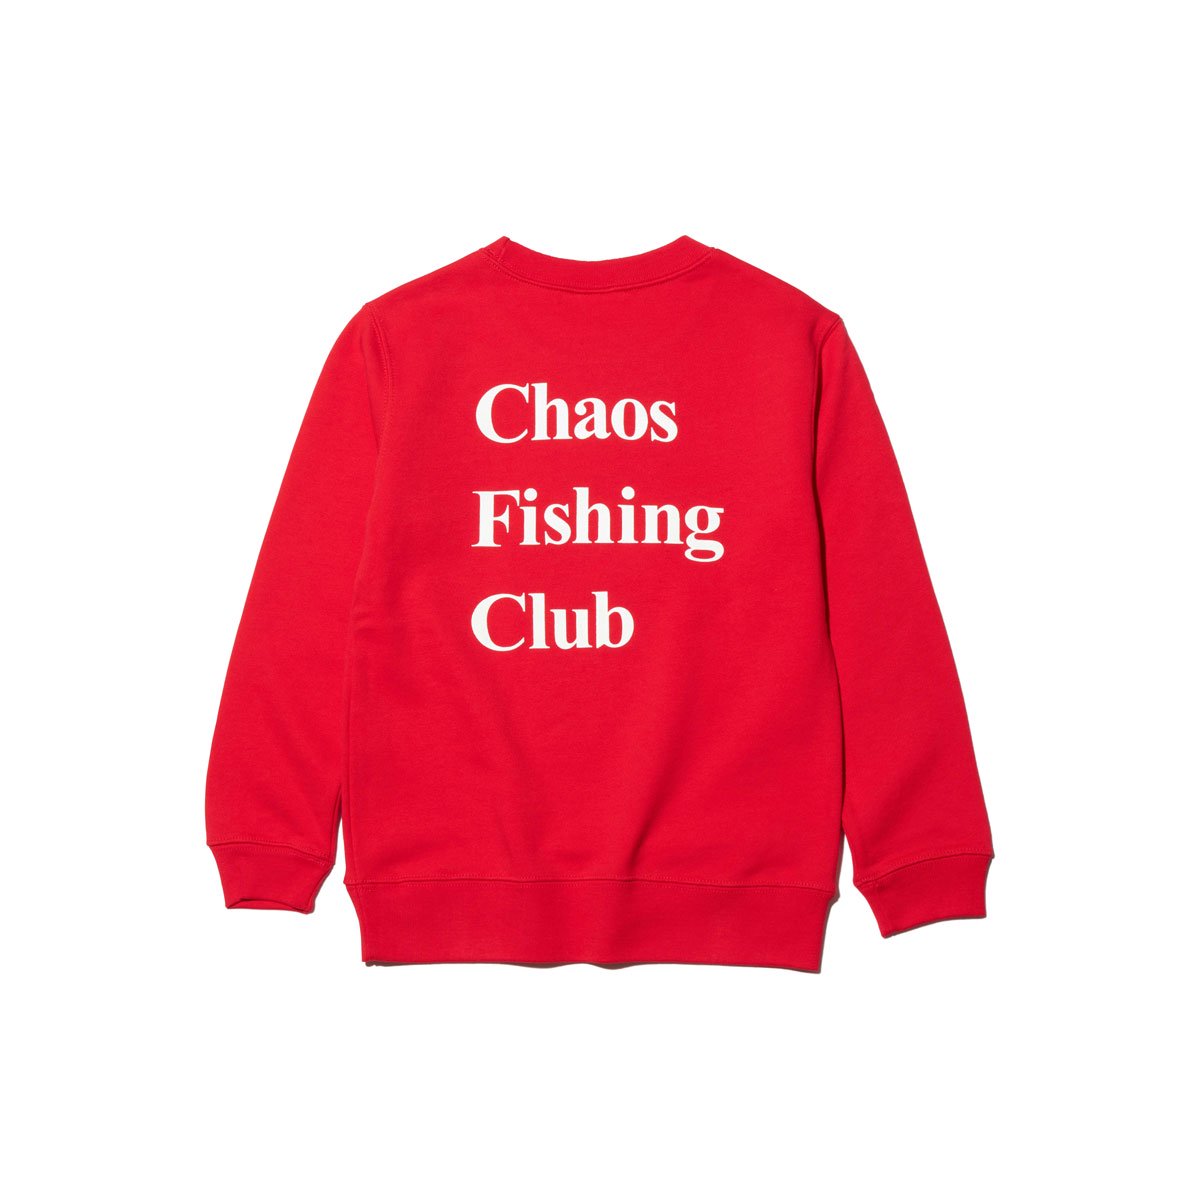 Chaos Fishing Club - KIDS LOGO CREW NECK L/S - SHRED